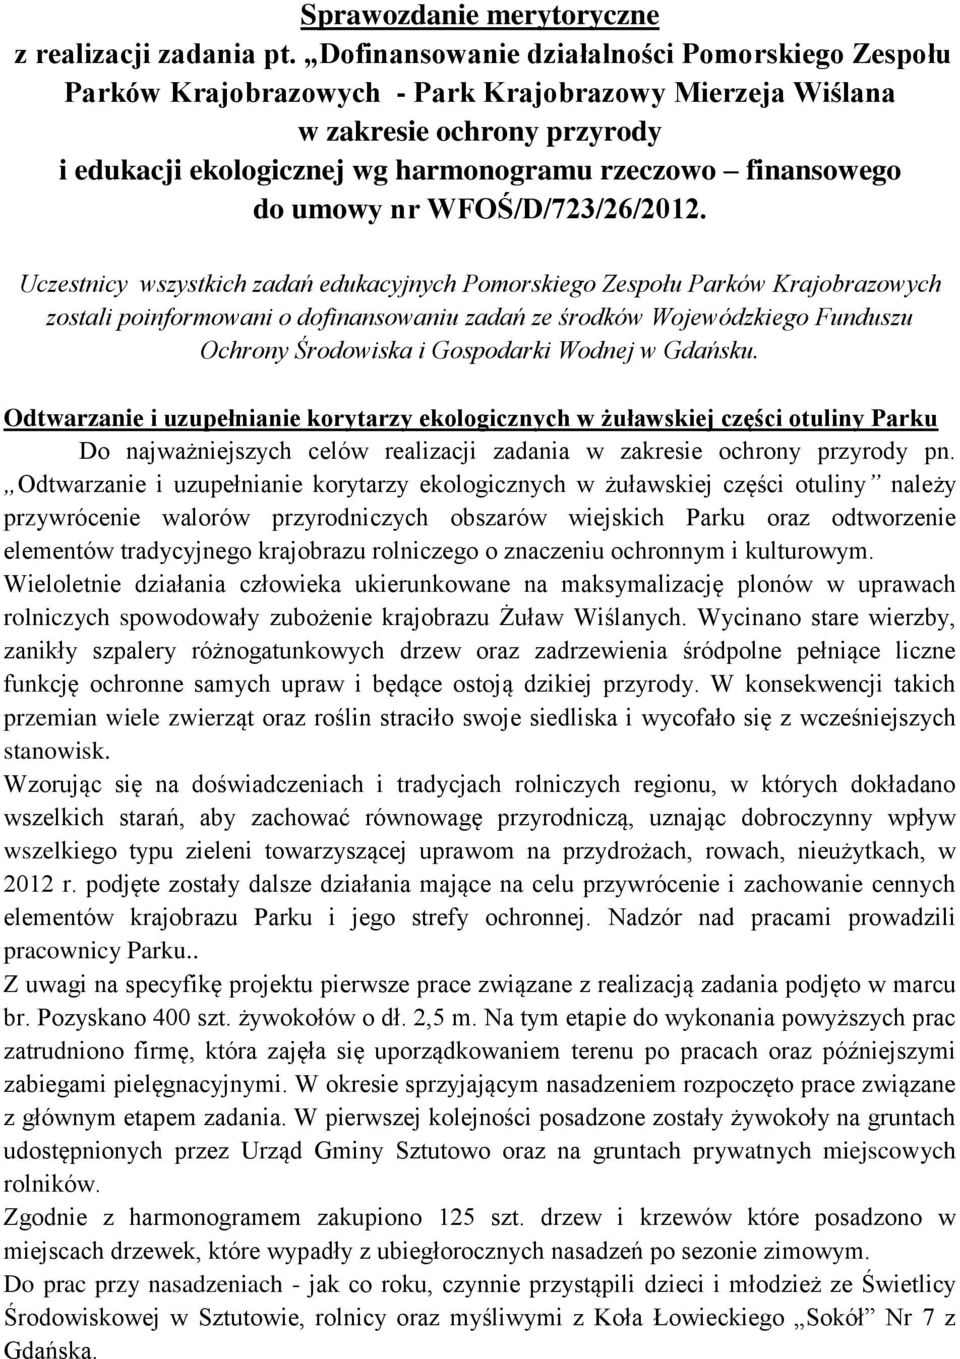 umowy nr WFOŚ/D/723/26/2012.